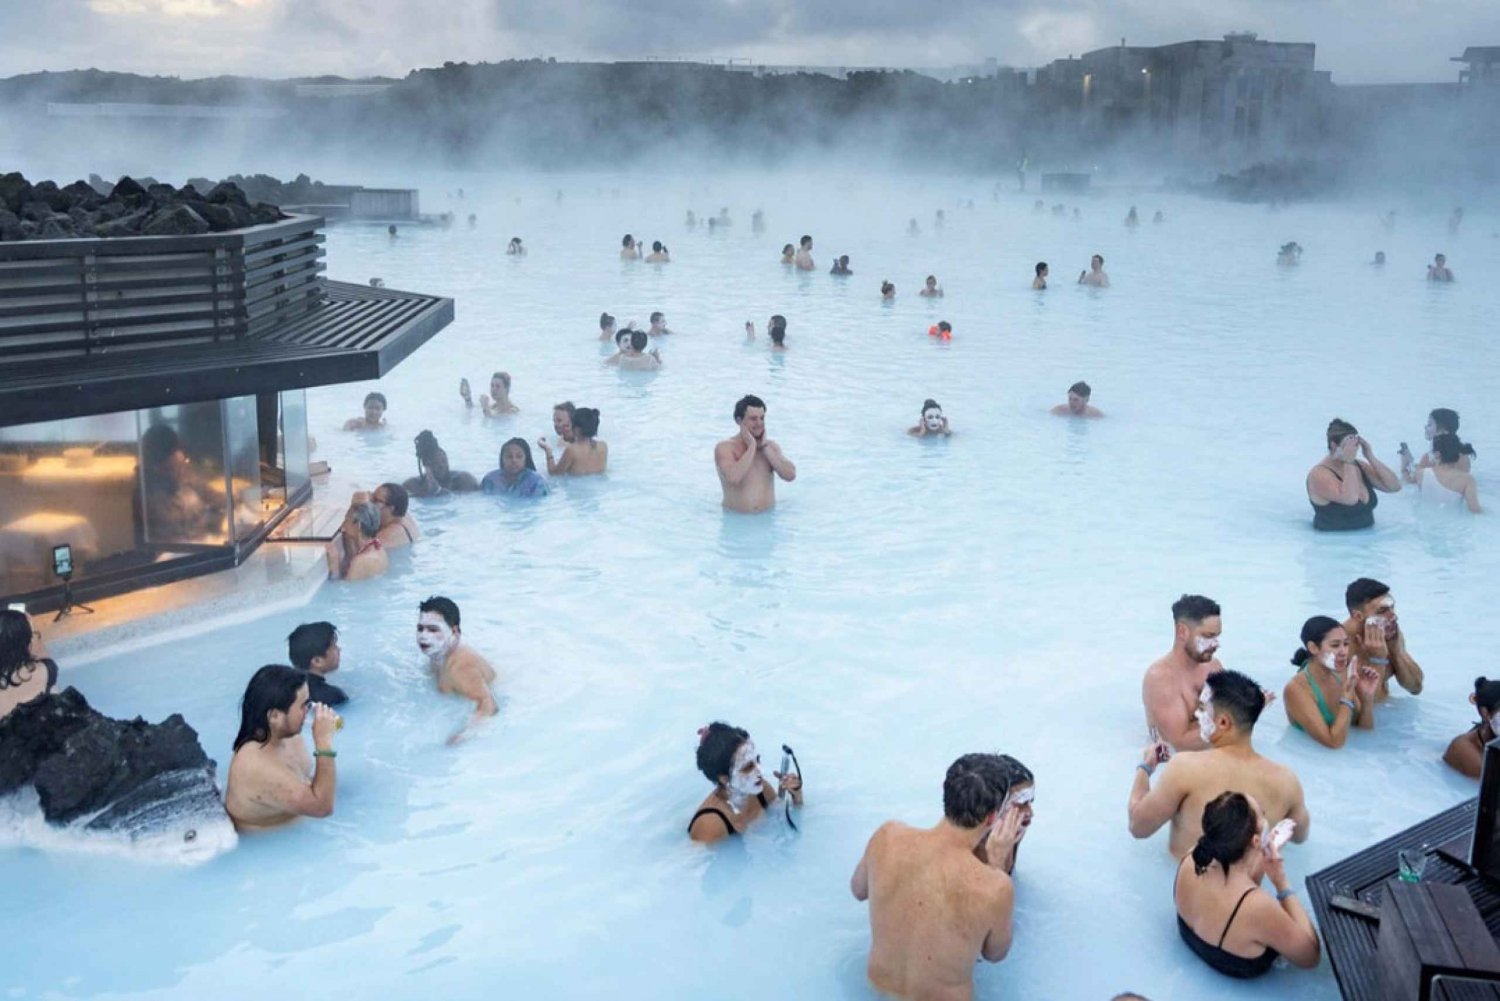 De/para Reykjavik: Traslado particular da Lagoa Azul na Islândia